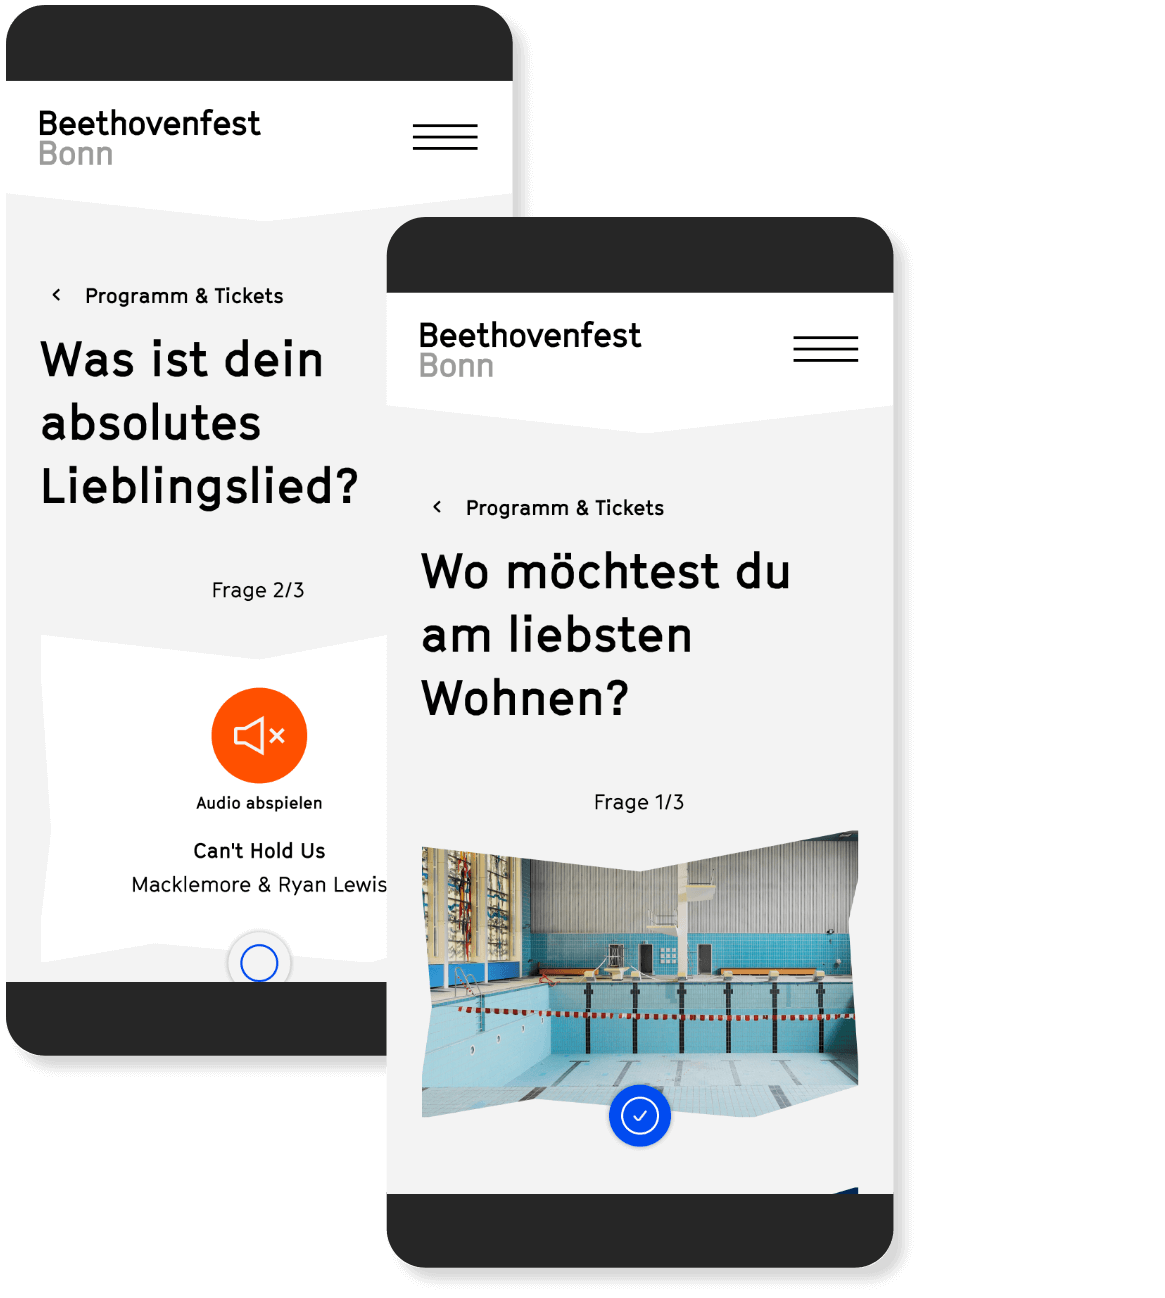 Beethovenfest Bonn – Konzert-O-Mat | MIR MEDIA - Digital Agentur | Django, Django Framework, User Centered Design, Design, User-Experience Workshop, Responsive, CMS, Personas-Modellierung, Mobile-First, Relaunch, Redesign